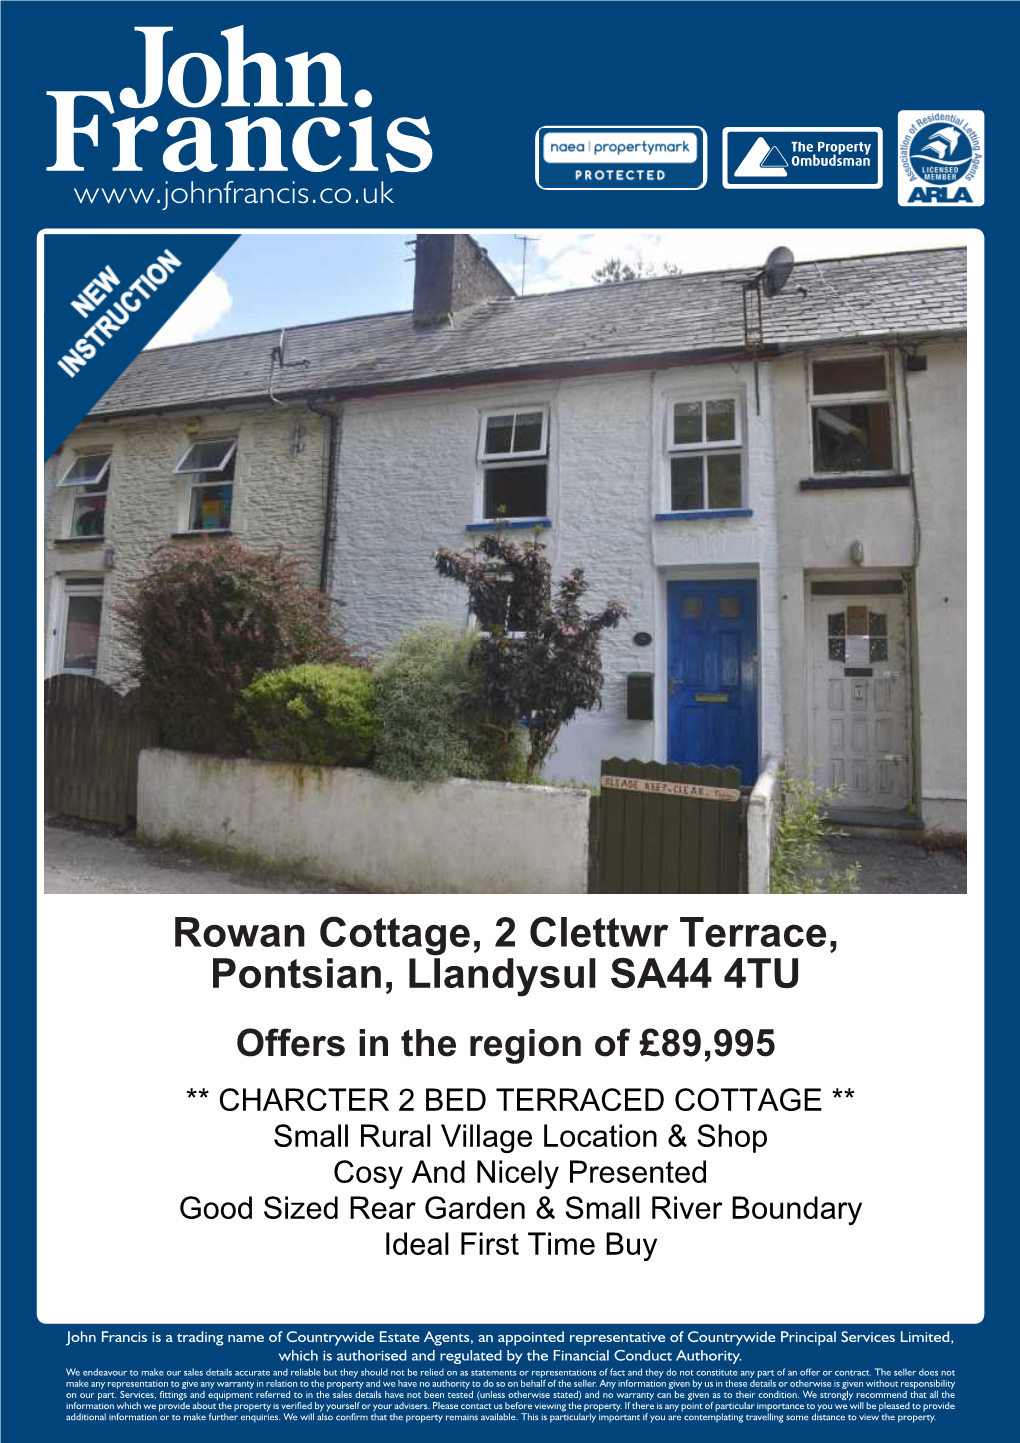 Rowan Cottage, 2 Clettwr Terrace, Pontsian, Llandysul SA44